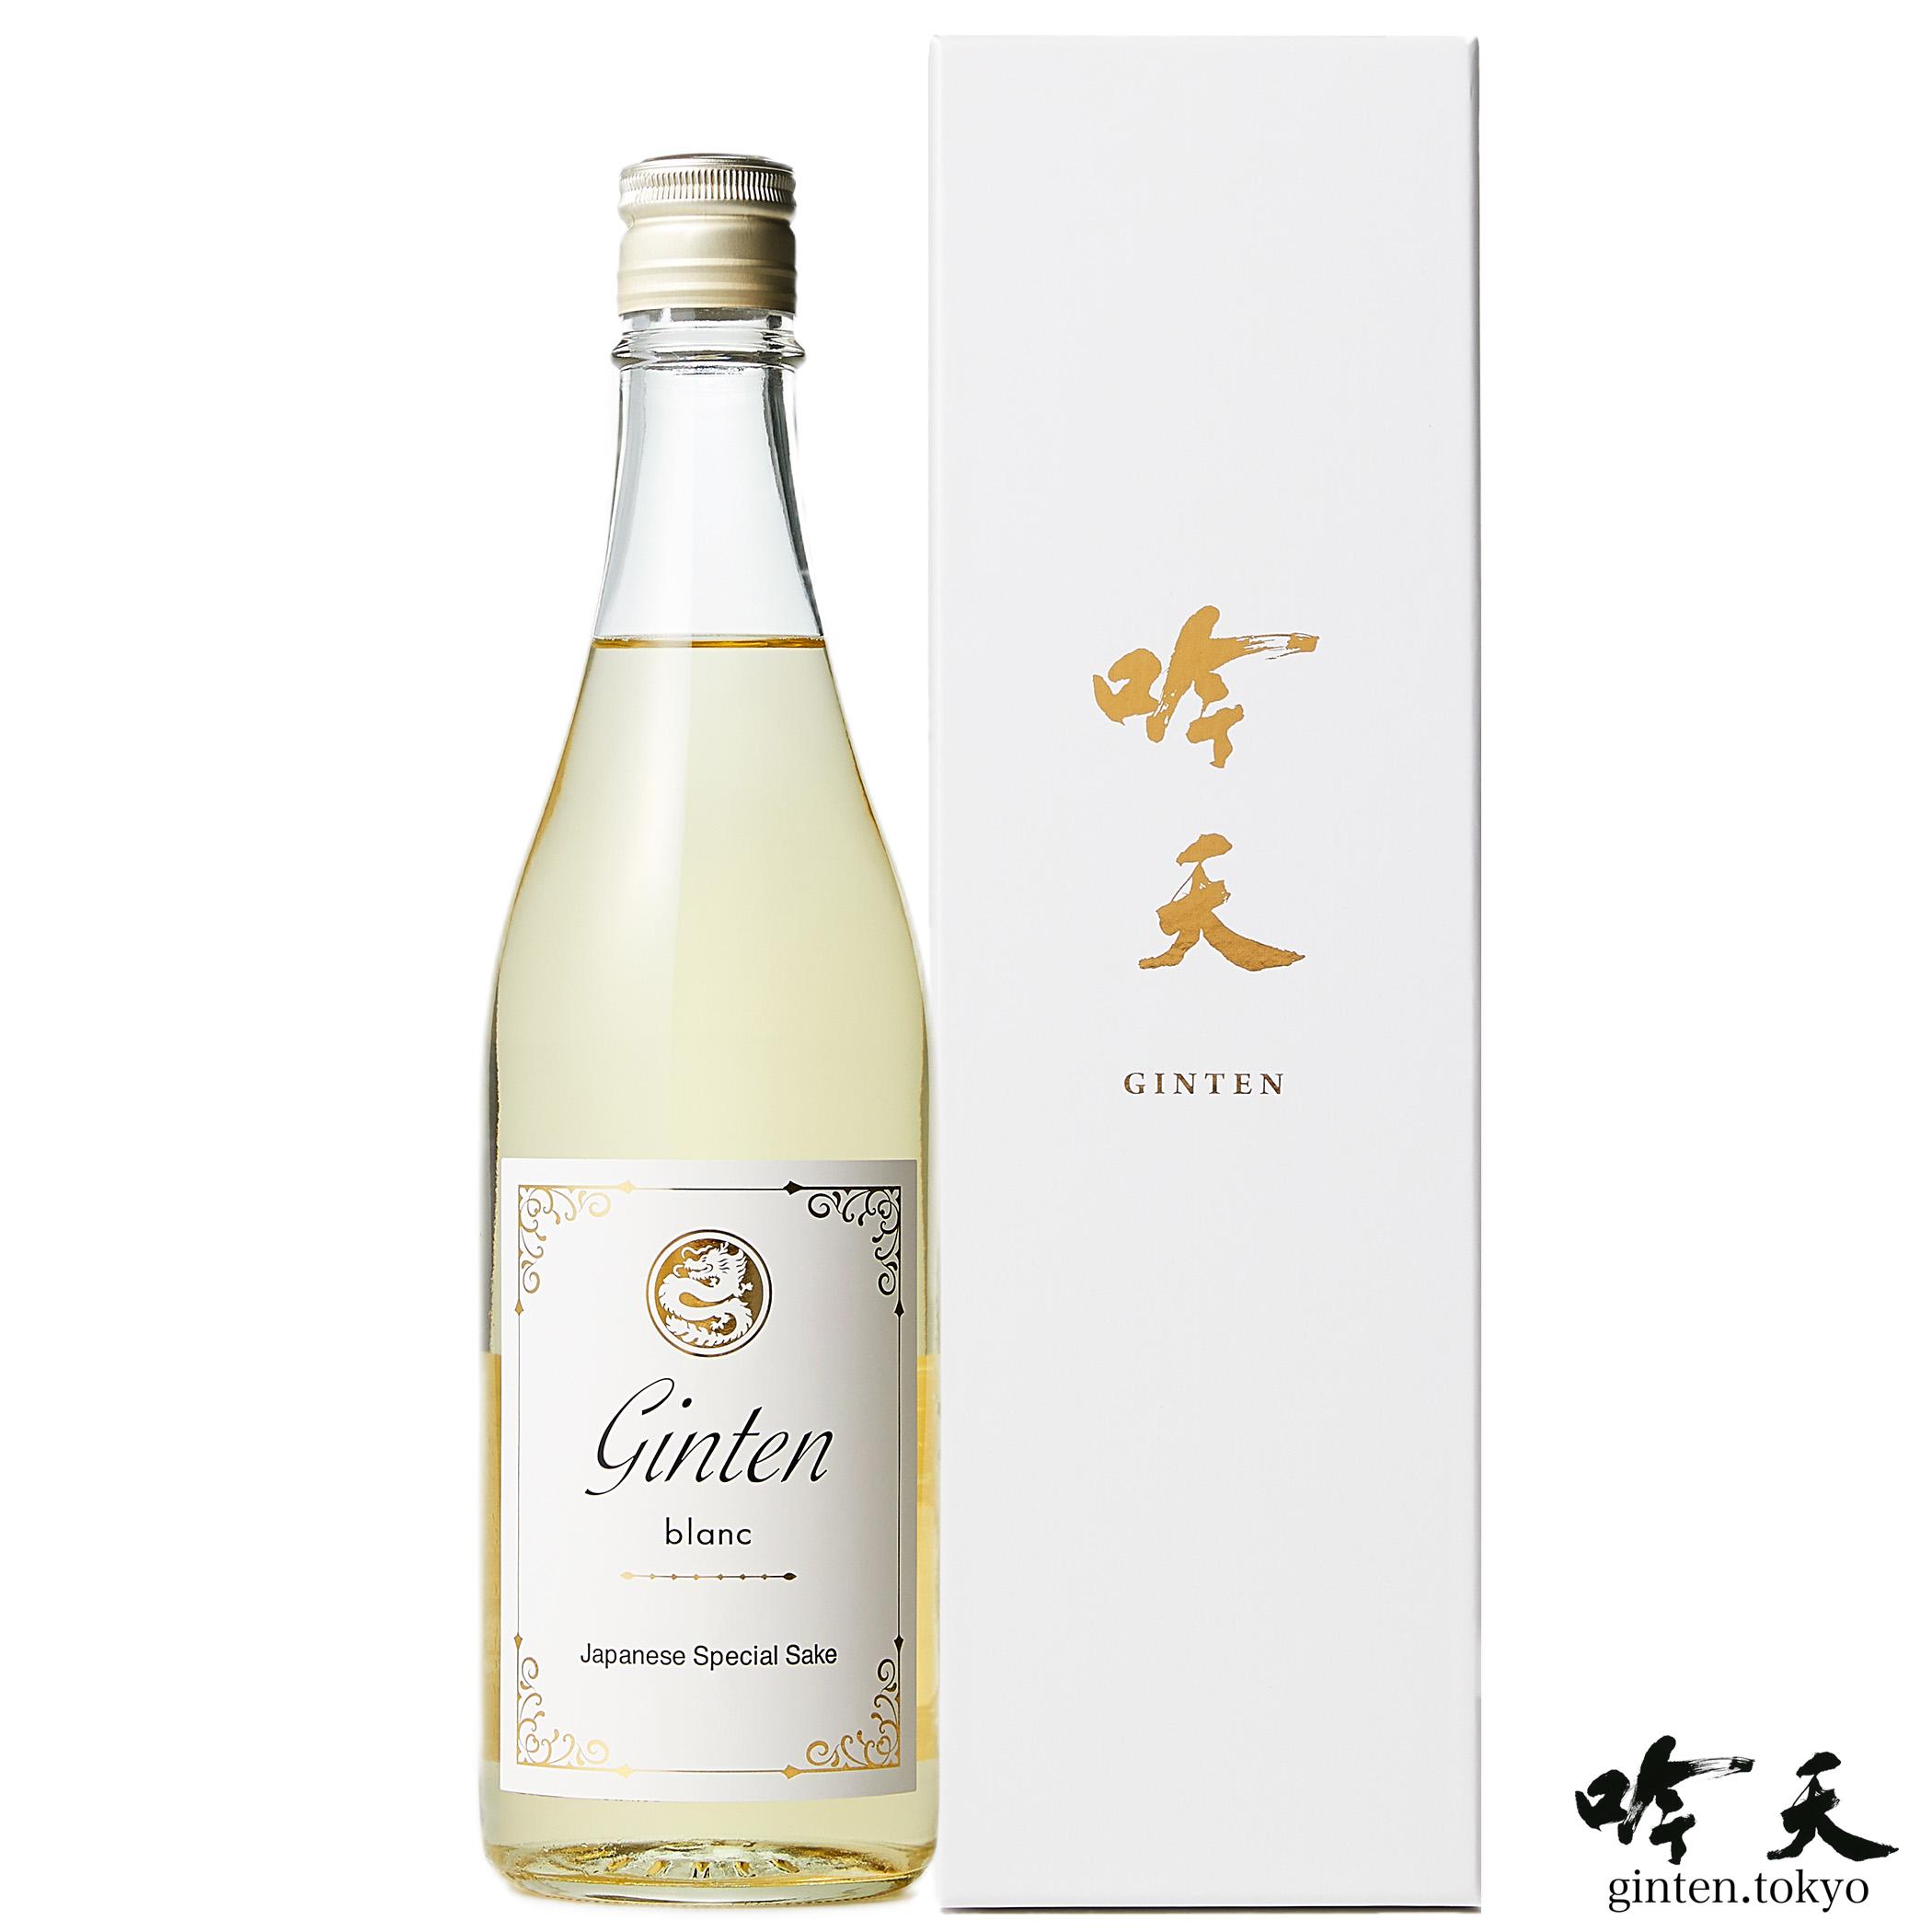 GINTEN blanc 2021 純米吟醸　(箱入り) (720ml)